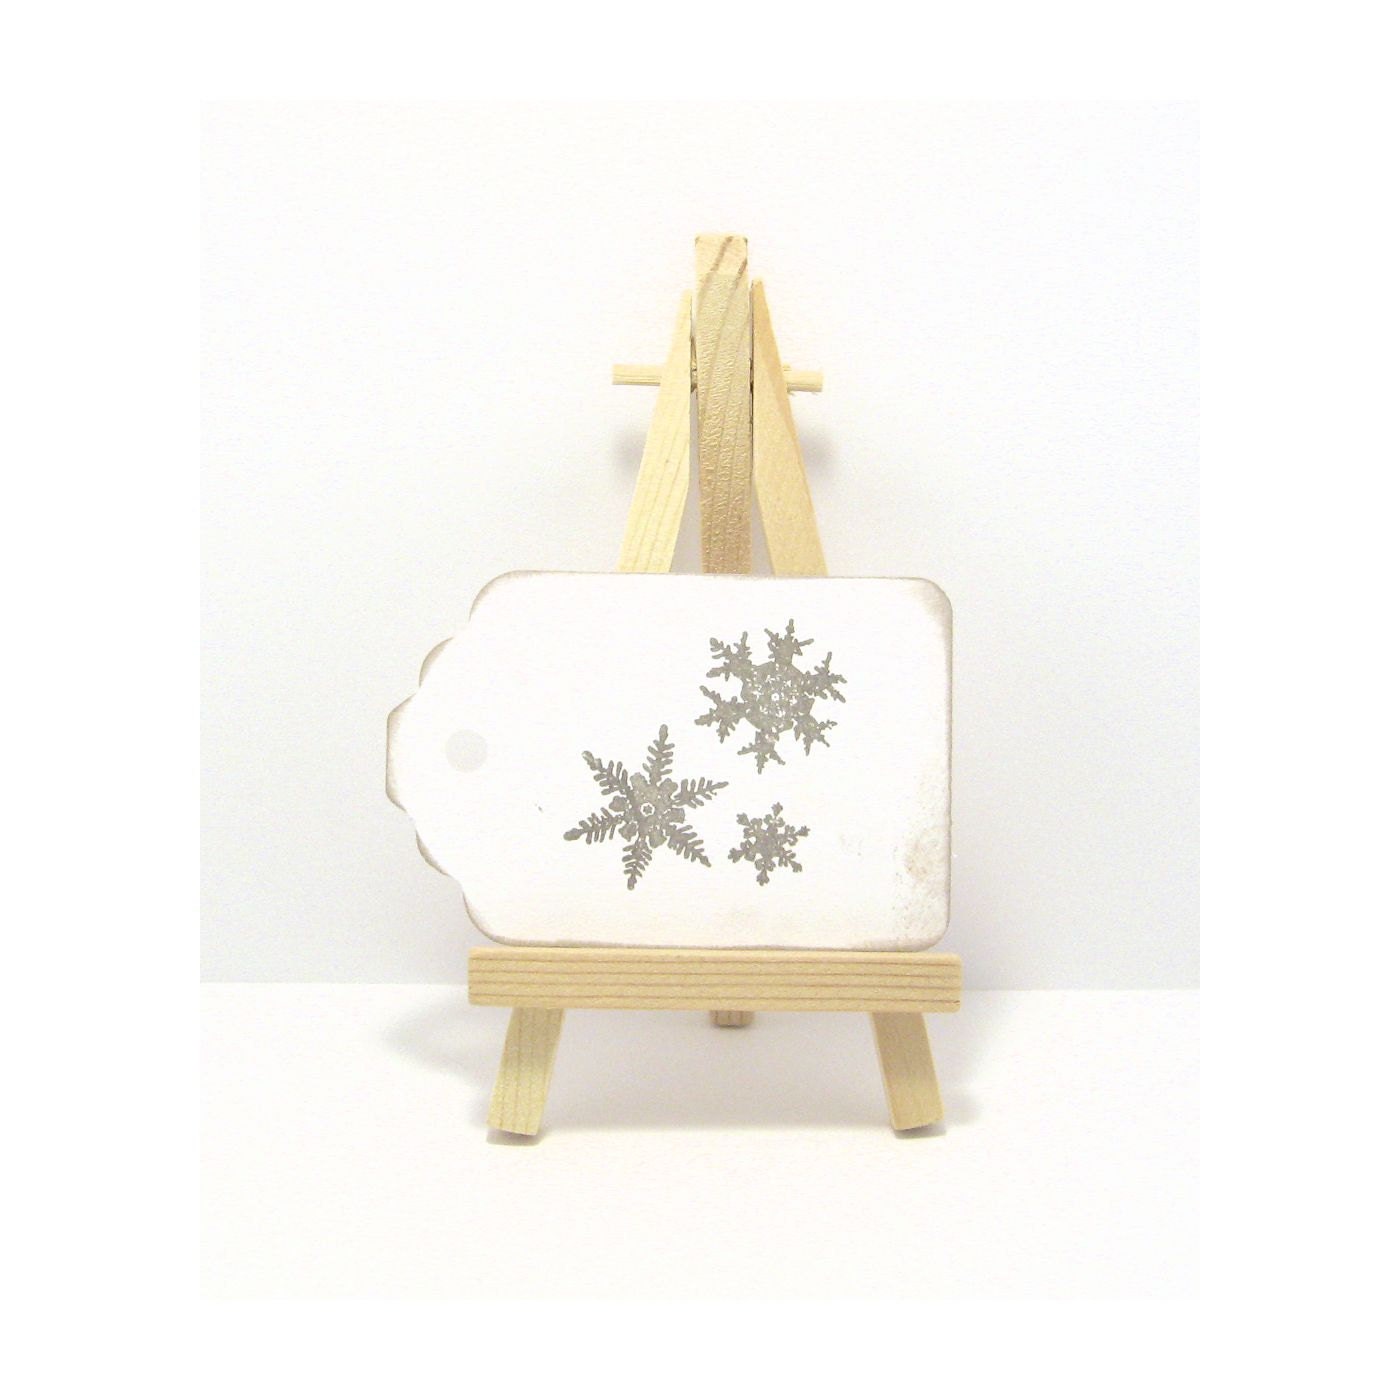 25 Snowflake Tags - Vintage Inspired Christmas Tags -  Holiday Gift Tags - Christmas Gift Tags - Distressed Tags - Snowflake Tags - PetuniasWhimsy